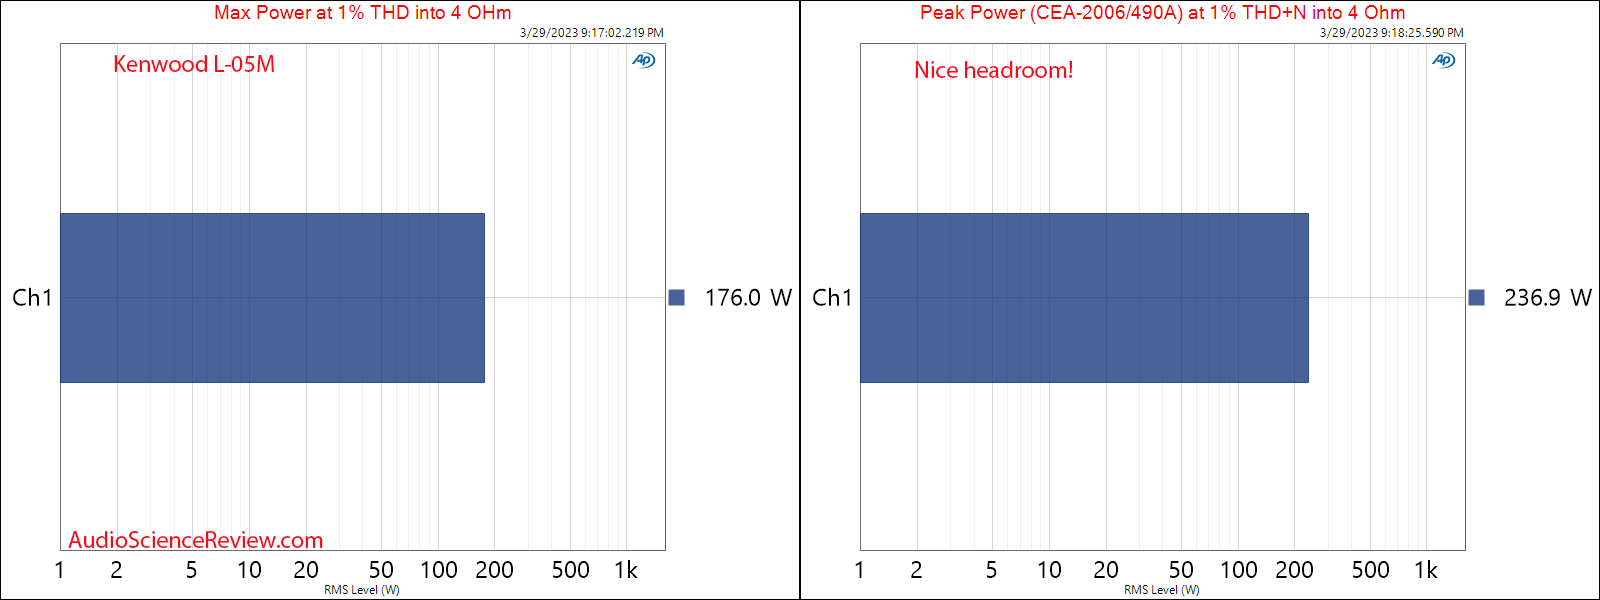 Kenwood L-05M Monoblock Amplifier max and peak Power into 4 ohm Measurement.png